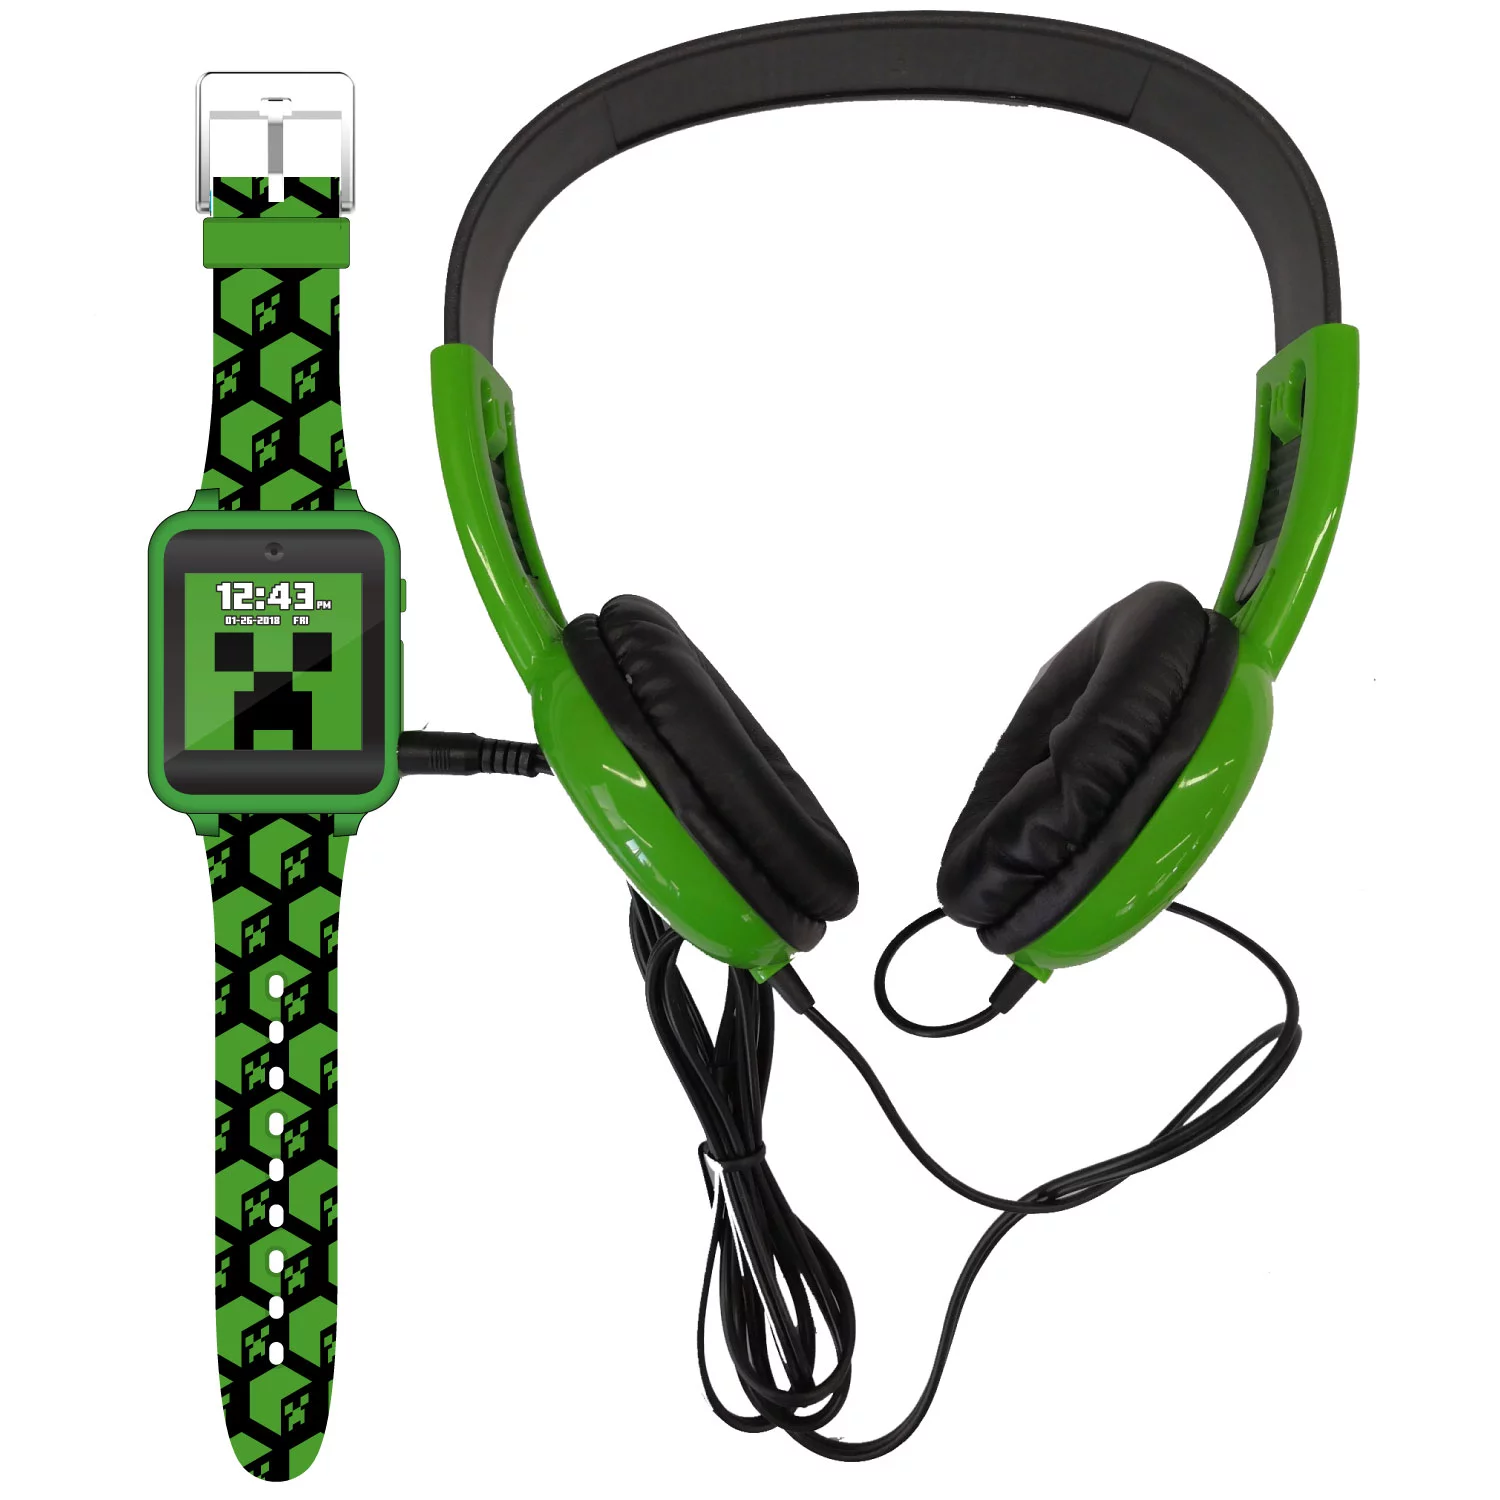 Minecraft Creeper Unisex Children's Interactive Smart Watch and Headphone Set in Green - MIN40080WMC